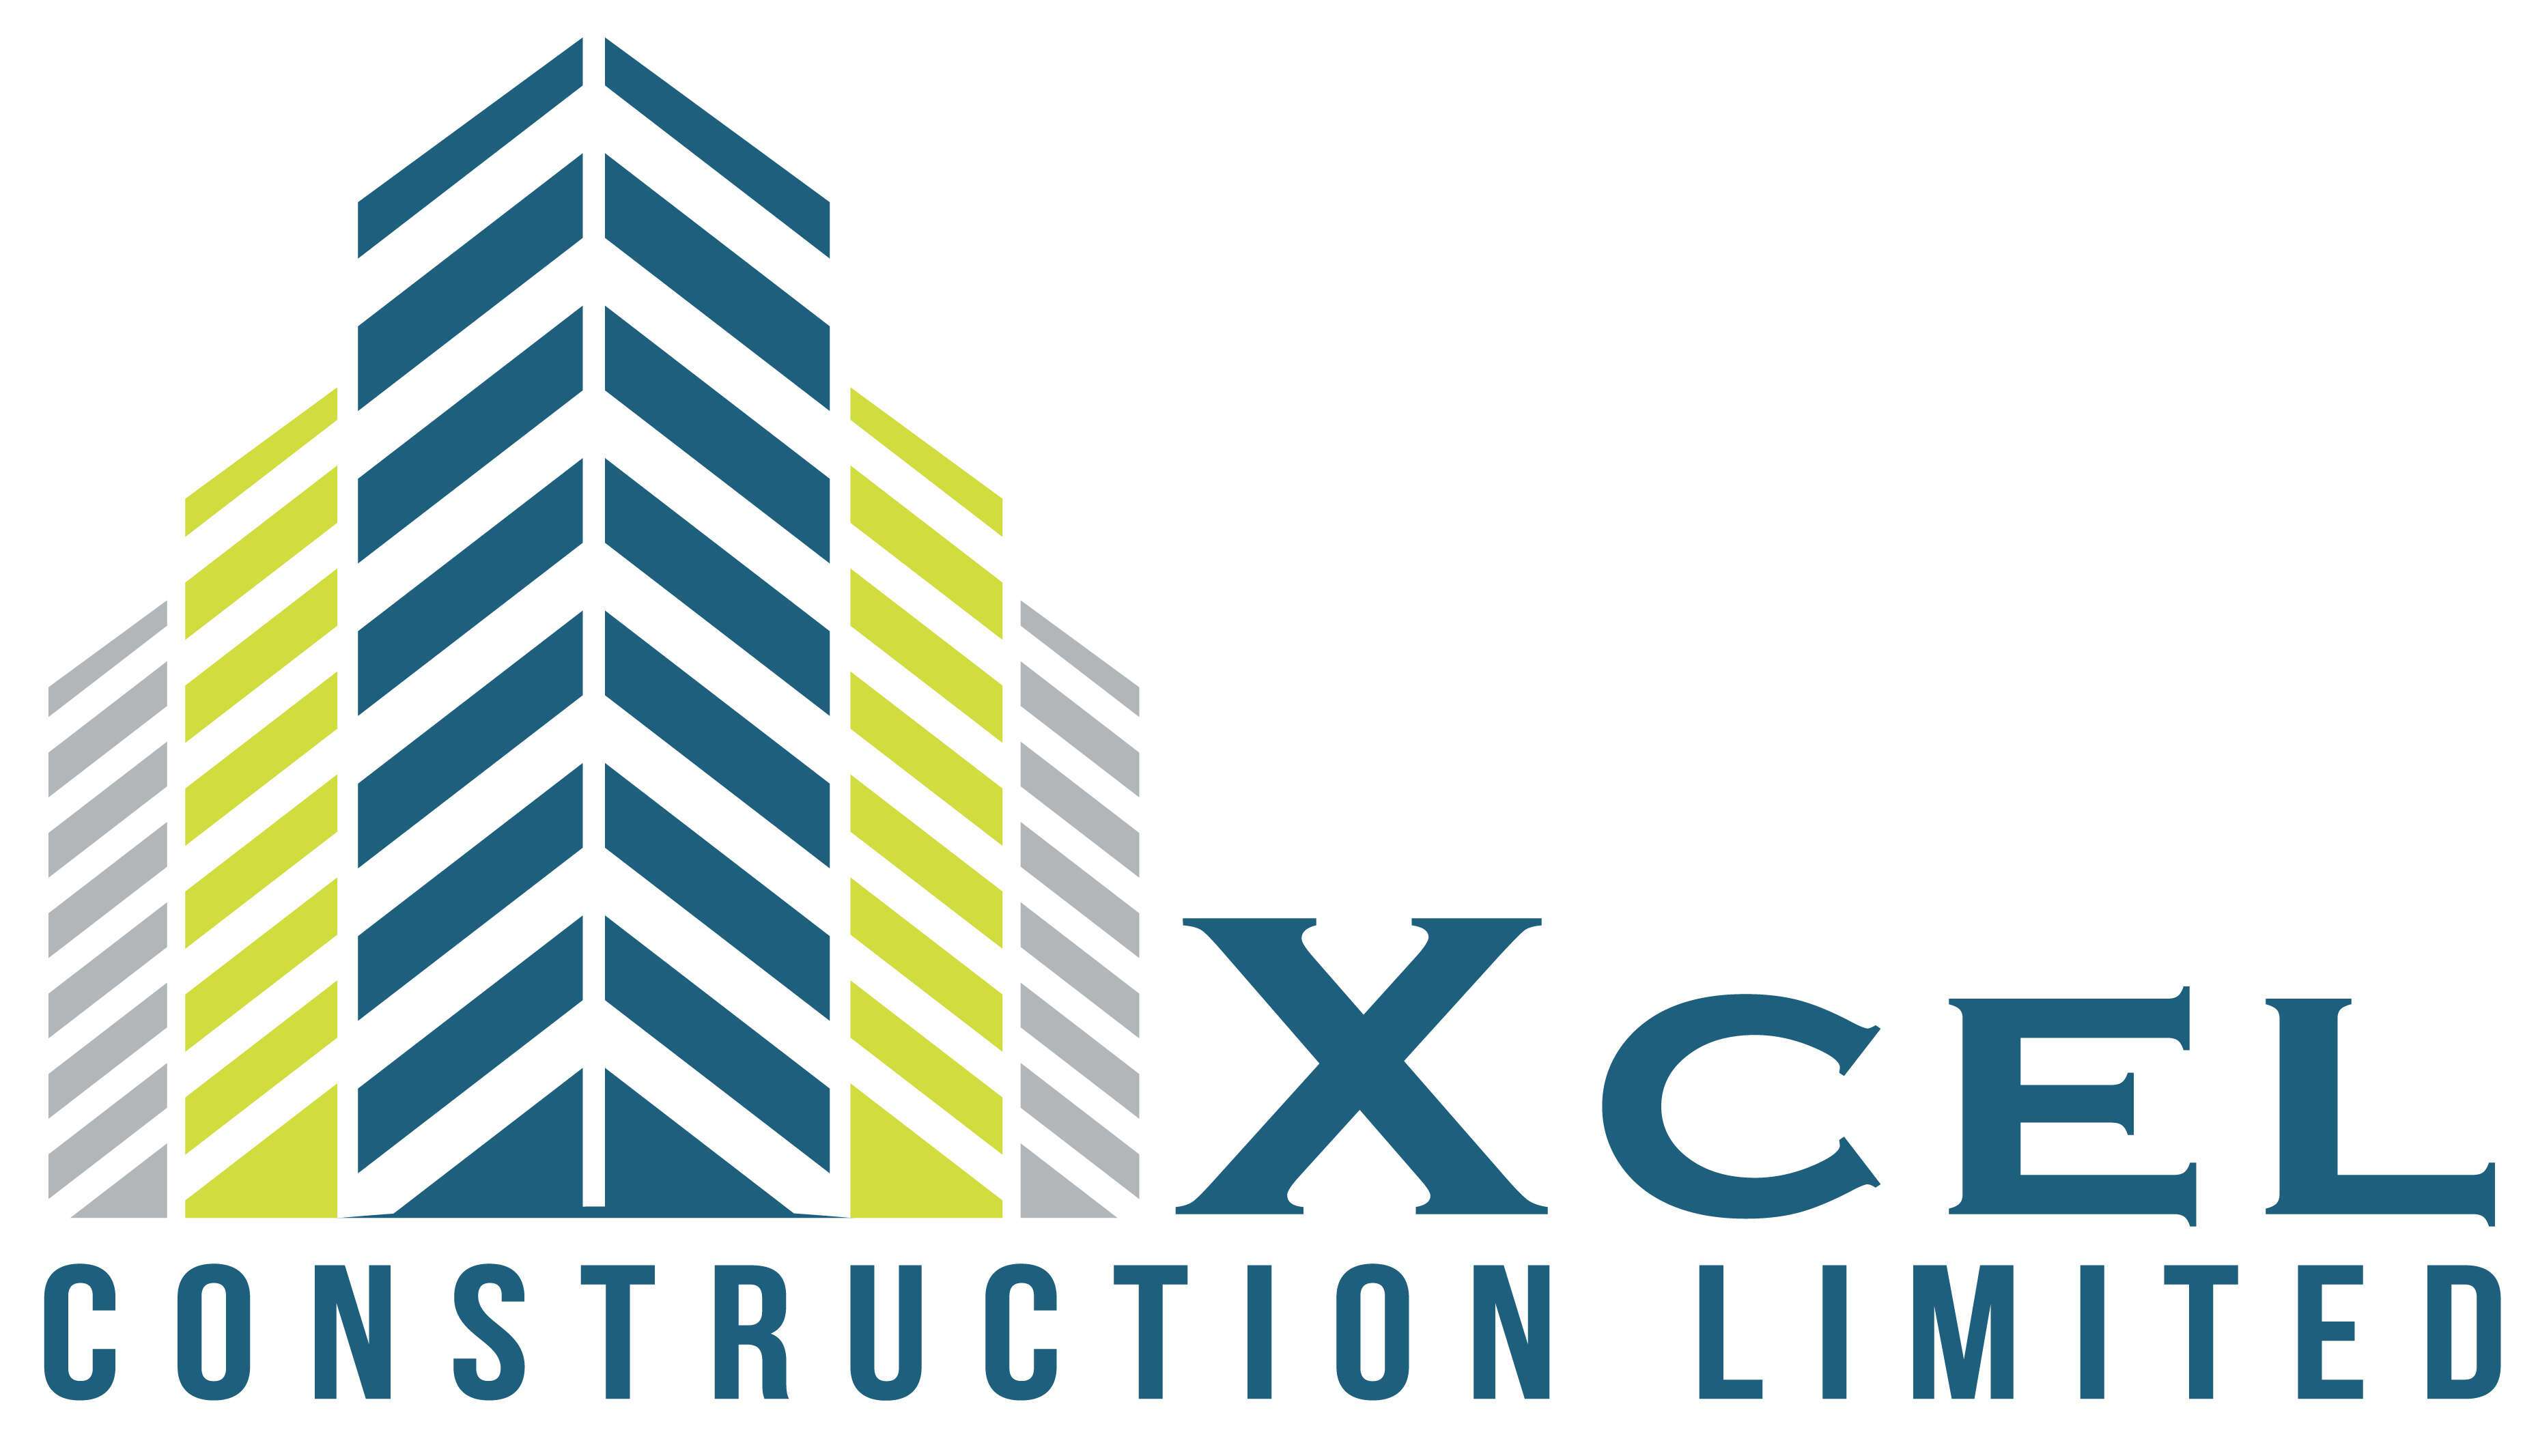 Xcel Construction Ltd.